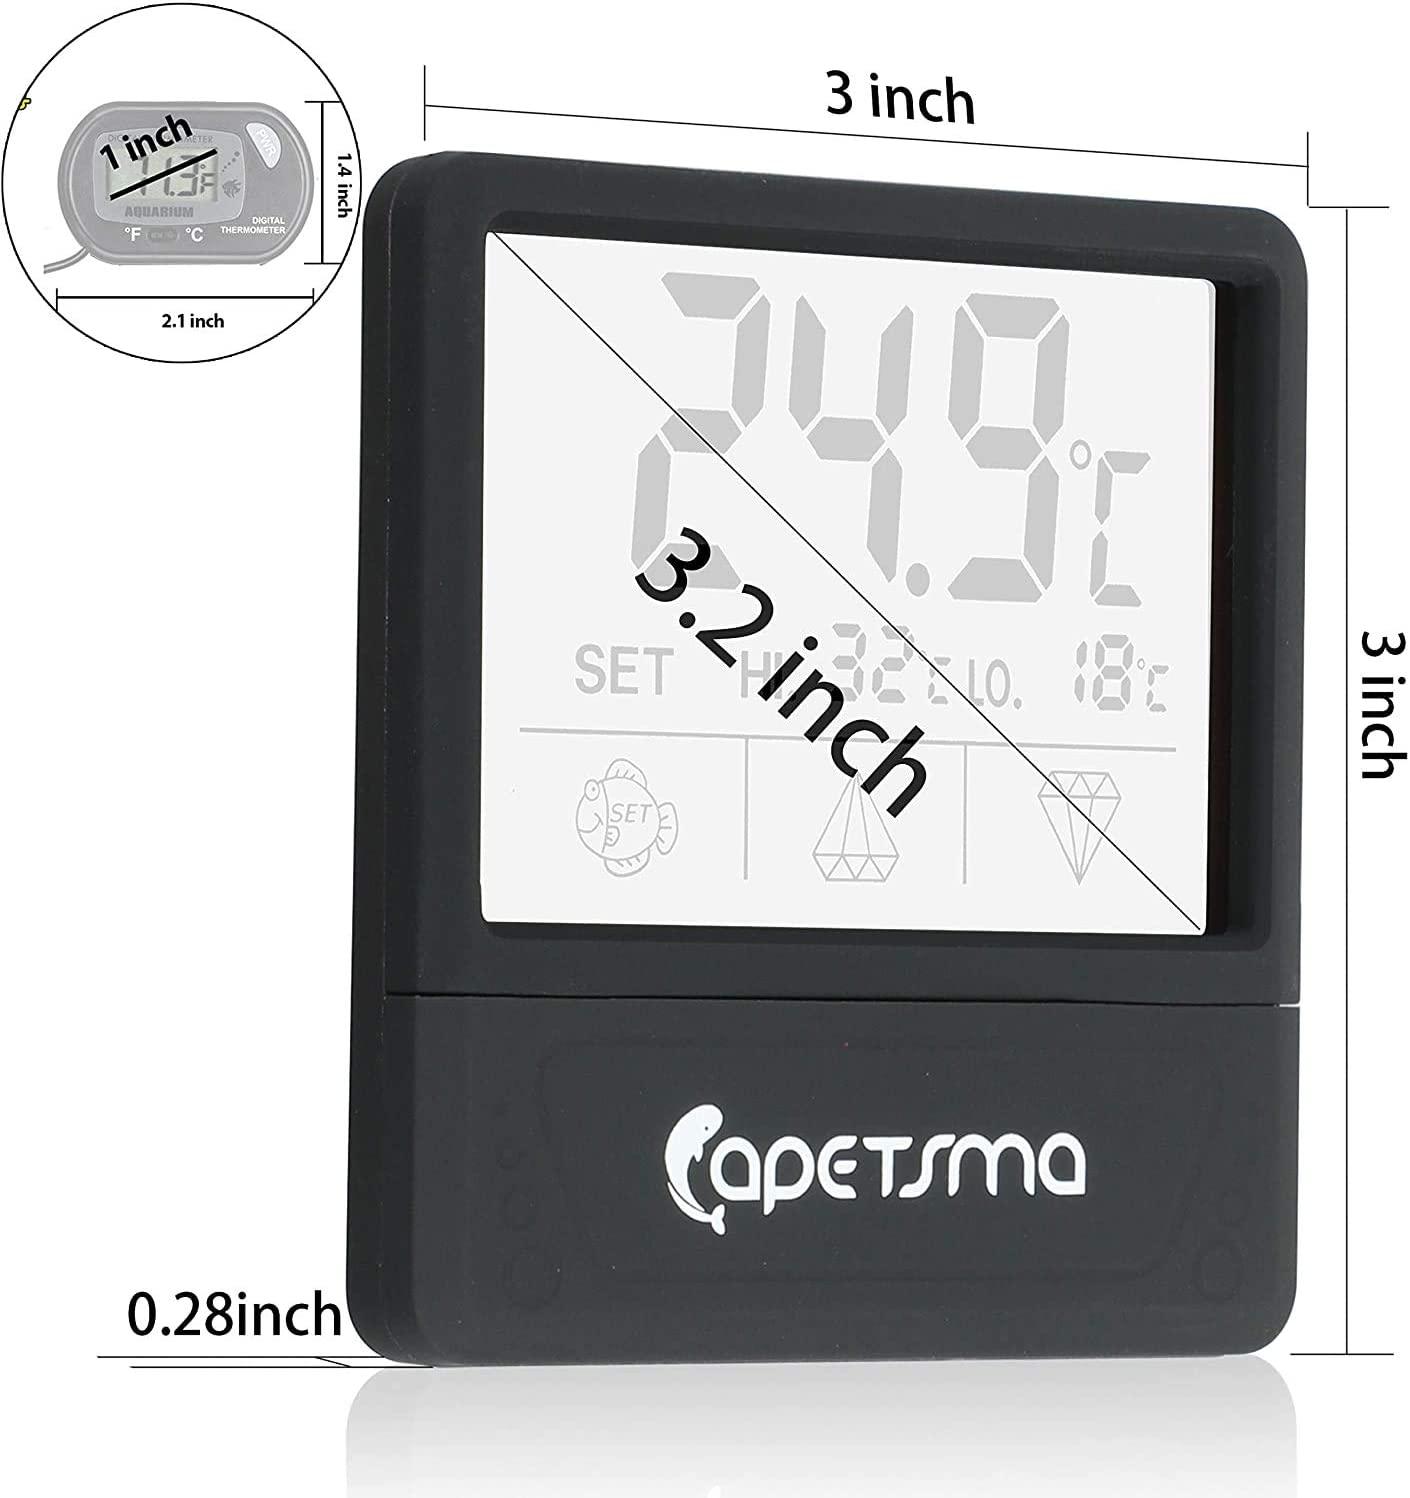 capetsma Reptile Thermometer, Digital Thermometer Hygrometer for Reptile Terrarium, Temperature and Humidity Monitor in Acrylic